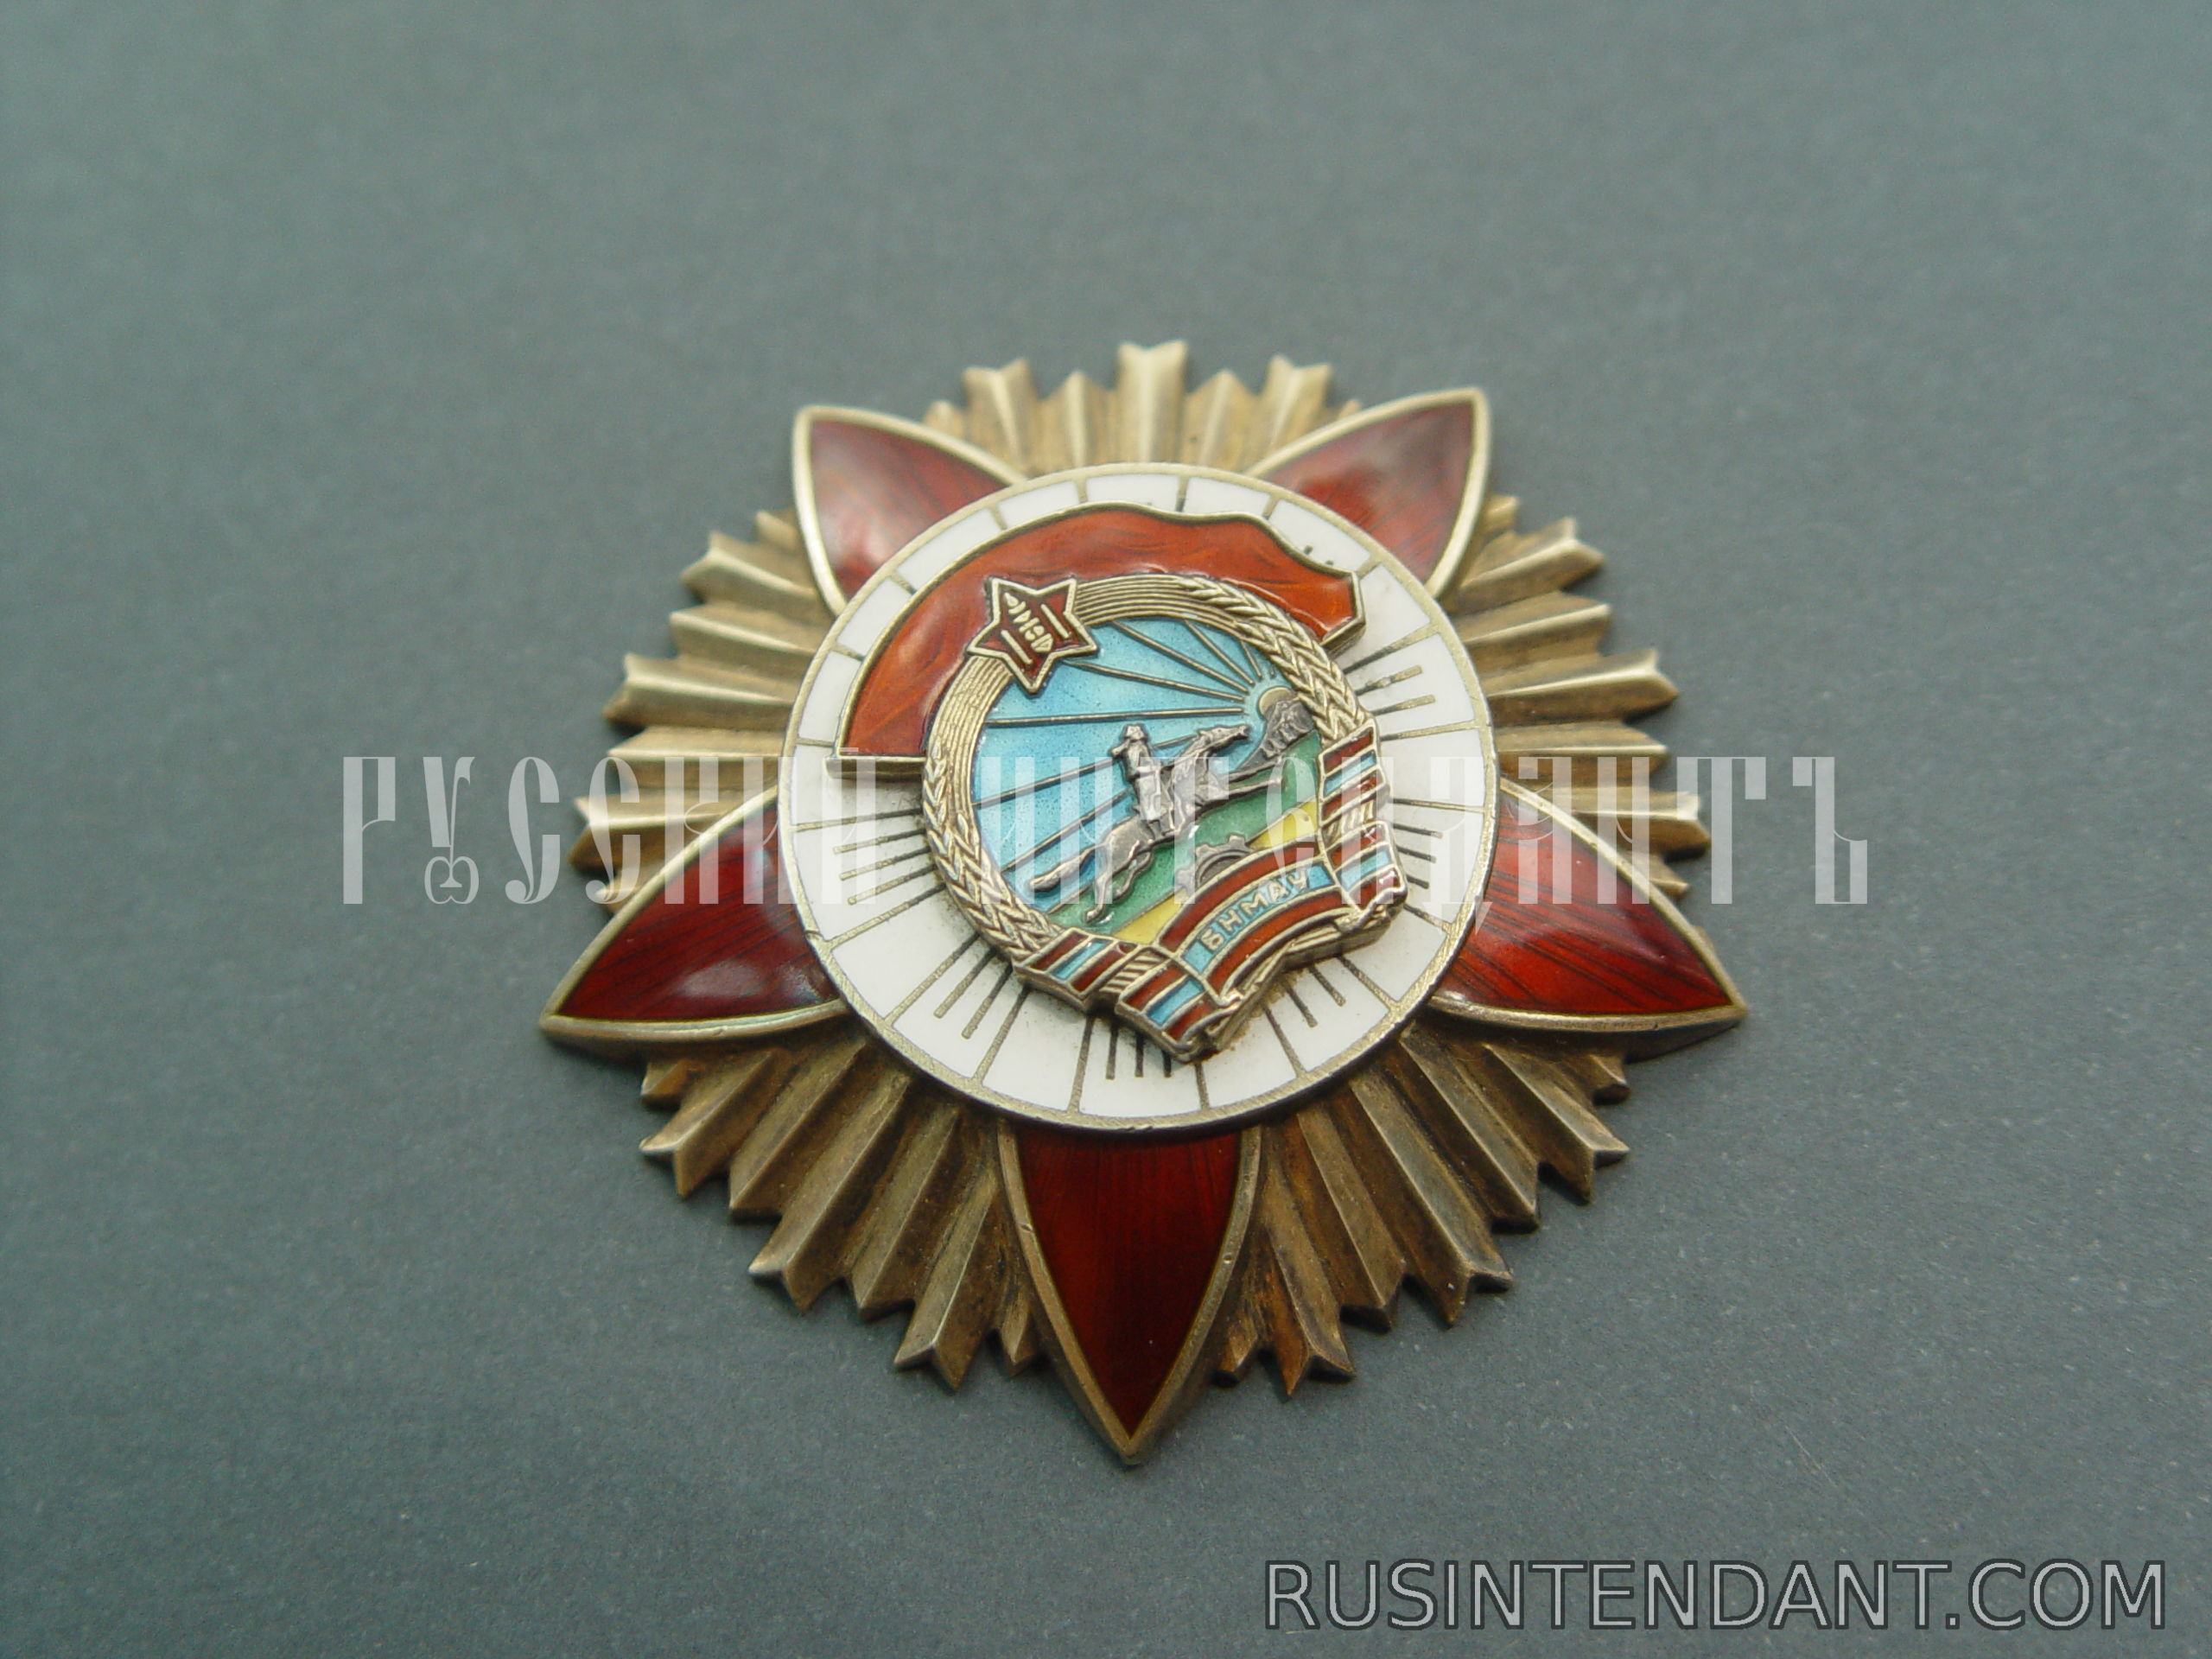 Фото 2: Орден Красного знамени за военные заслуги 